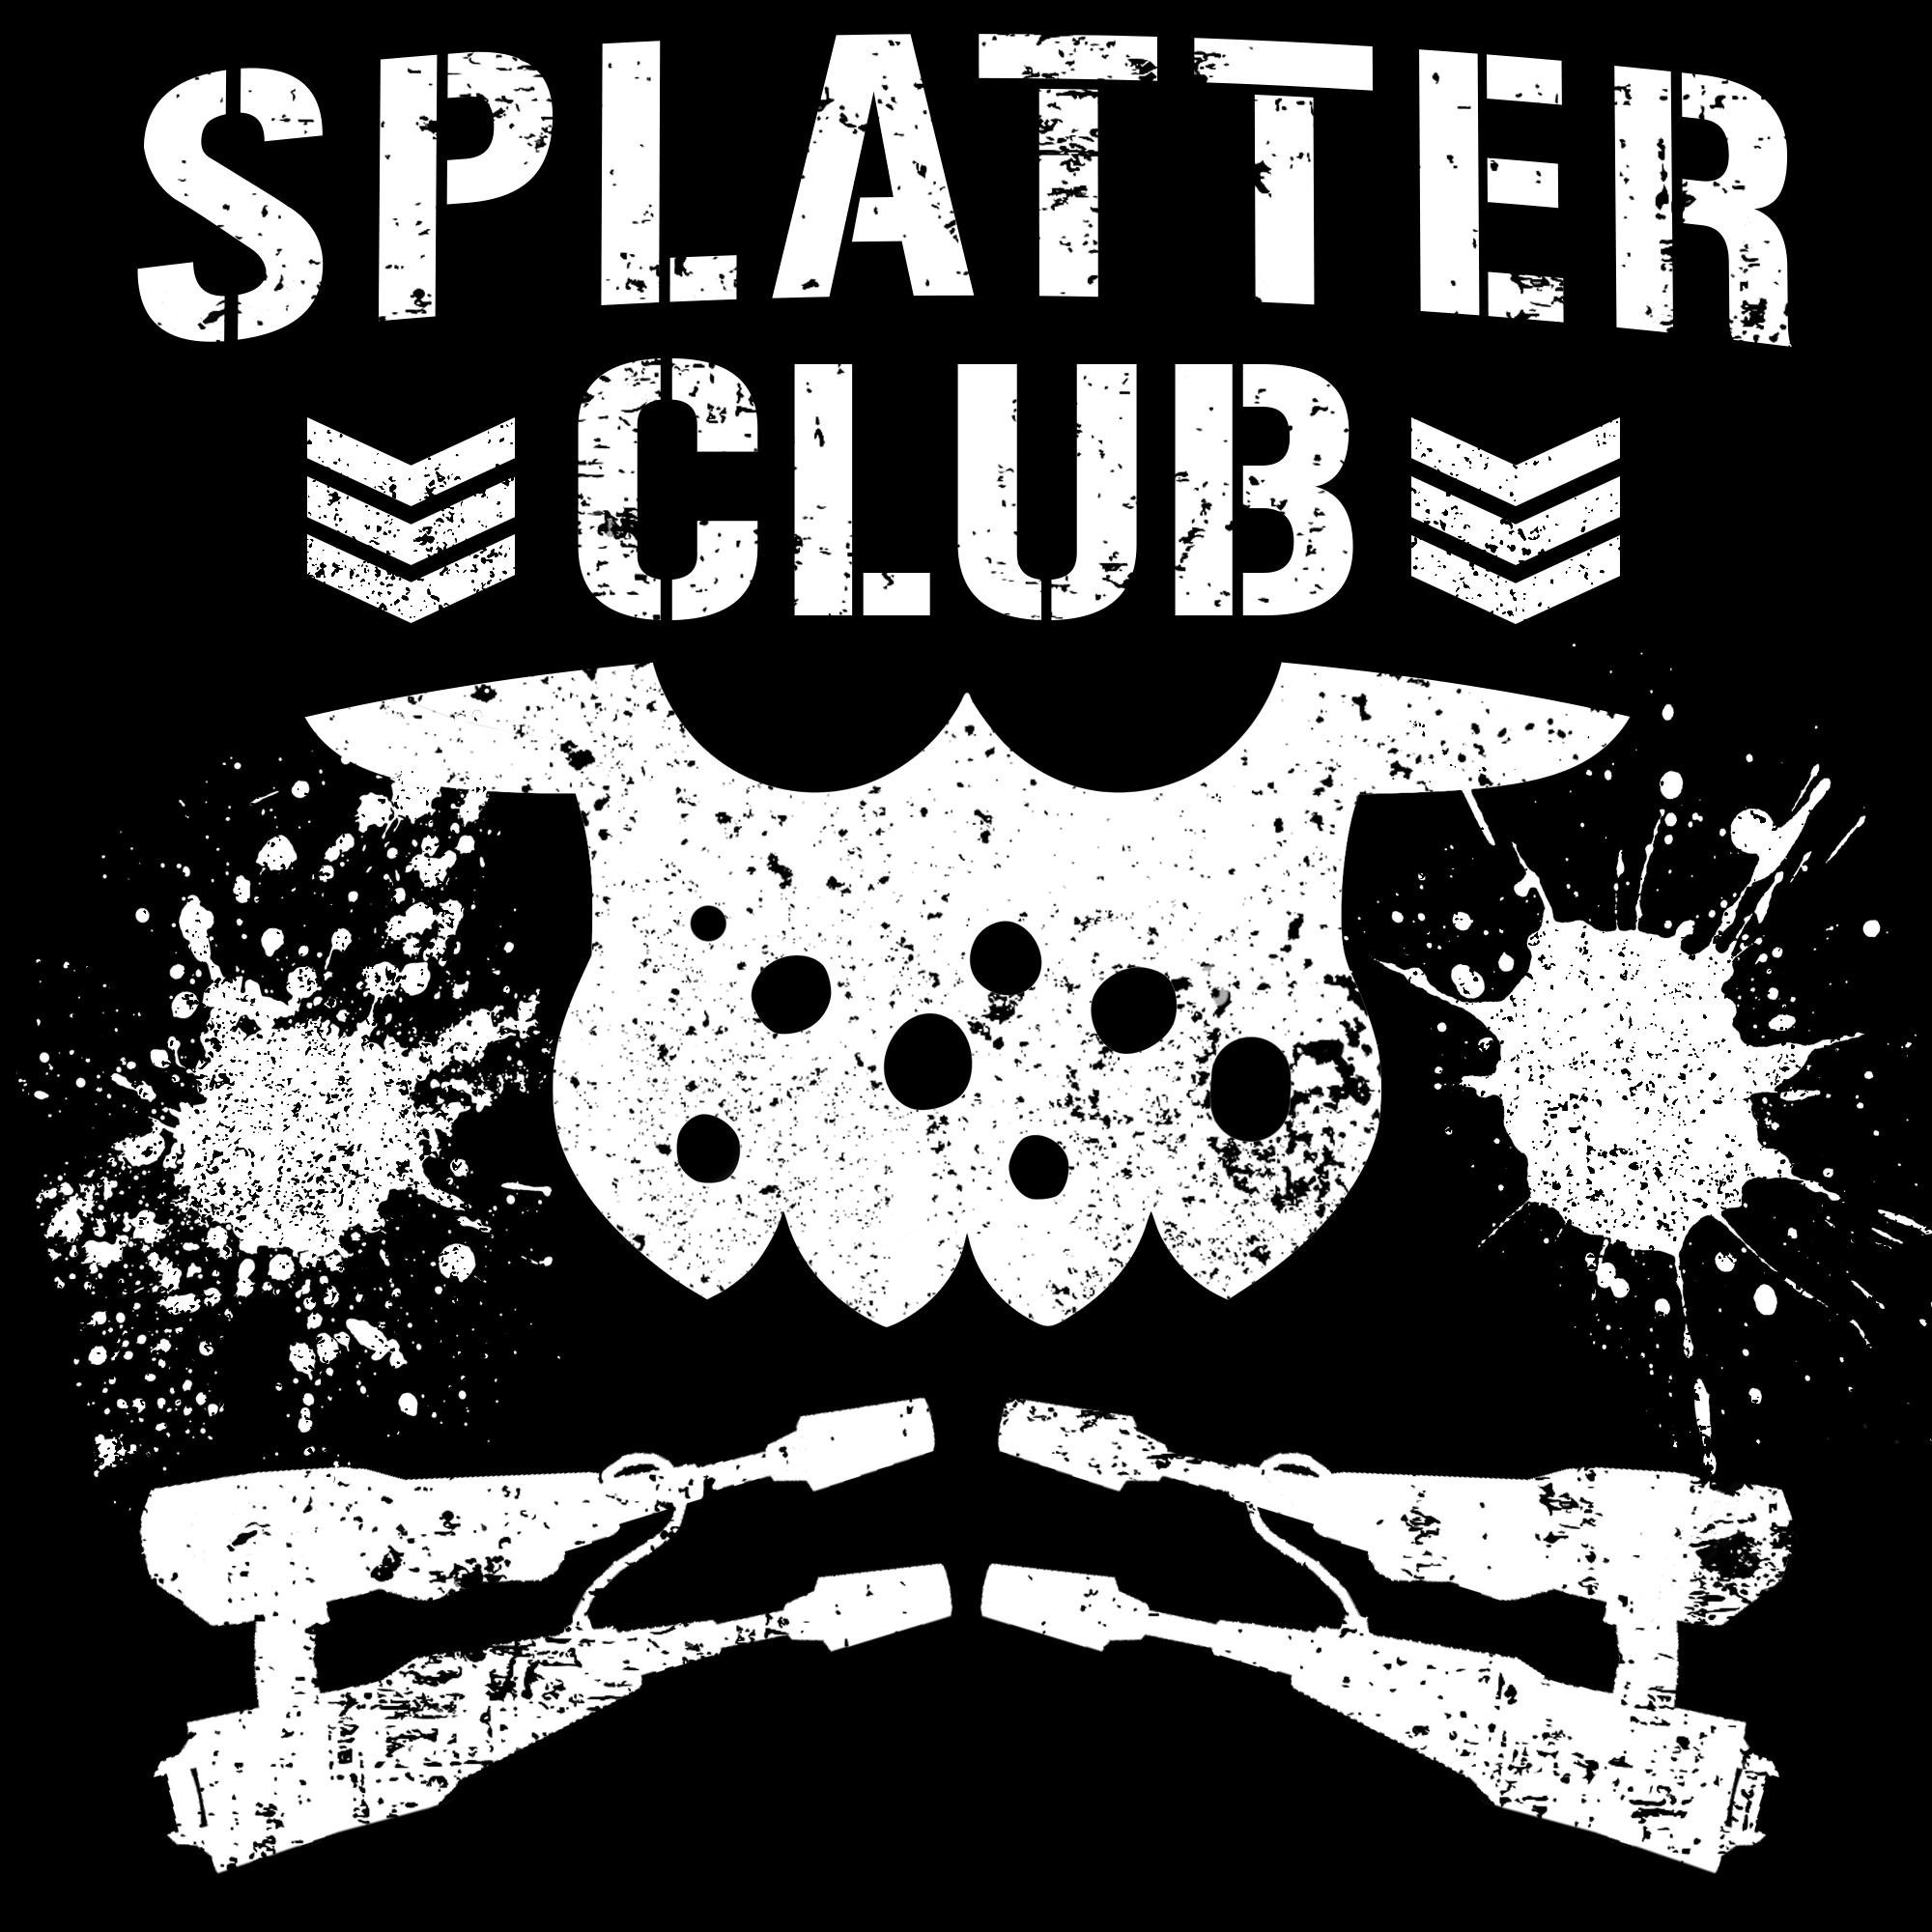 bullet club wallpaper hd,font,text,poster,logo,t shirt